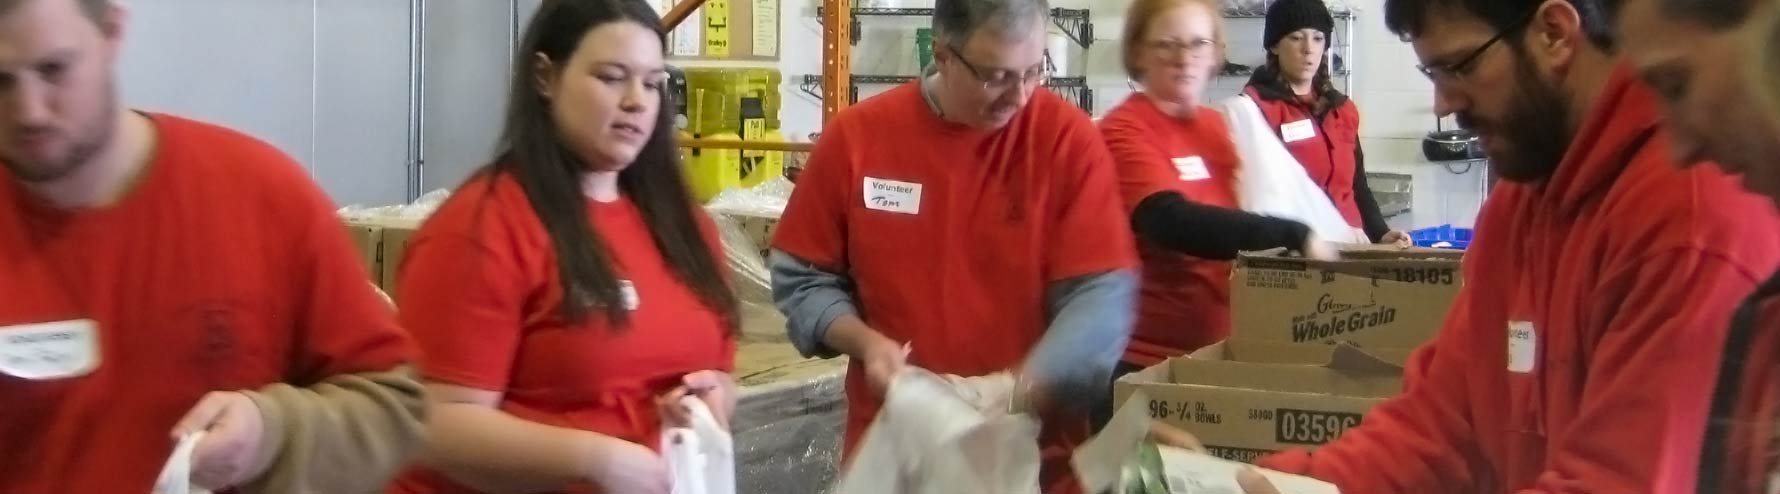 Vermont Mutual employees volunteering at food bank